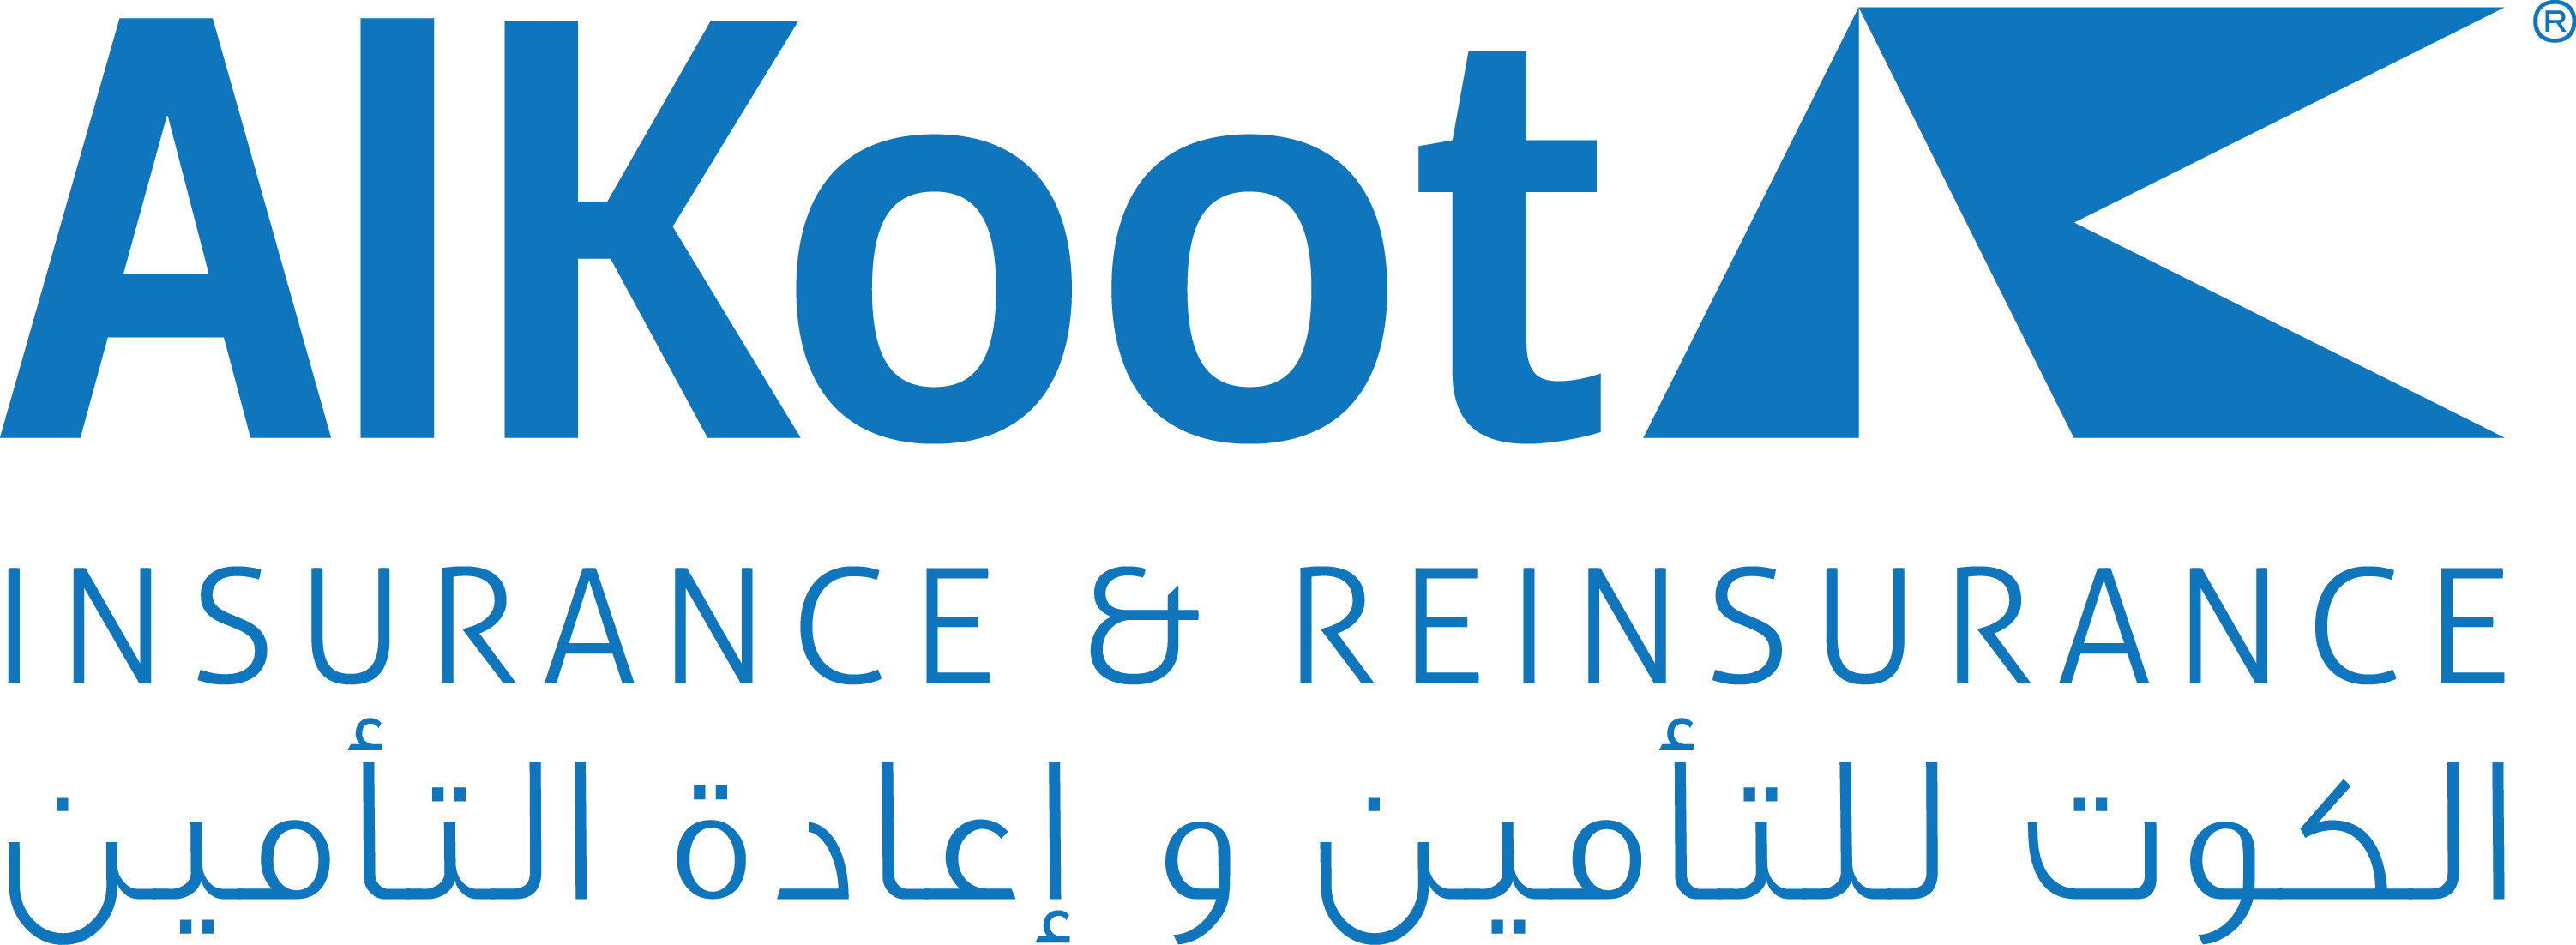 Aikoot Insurance & Reinsurance Company Logo